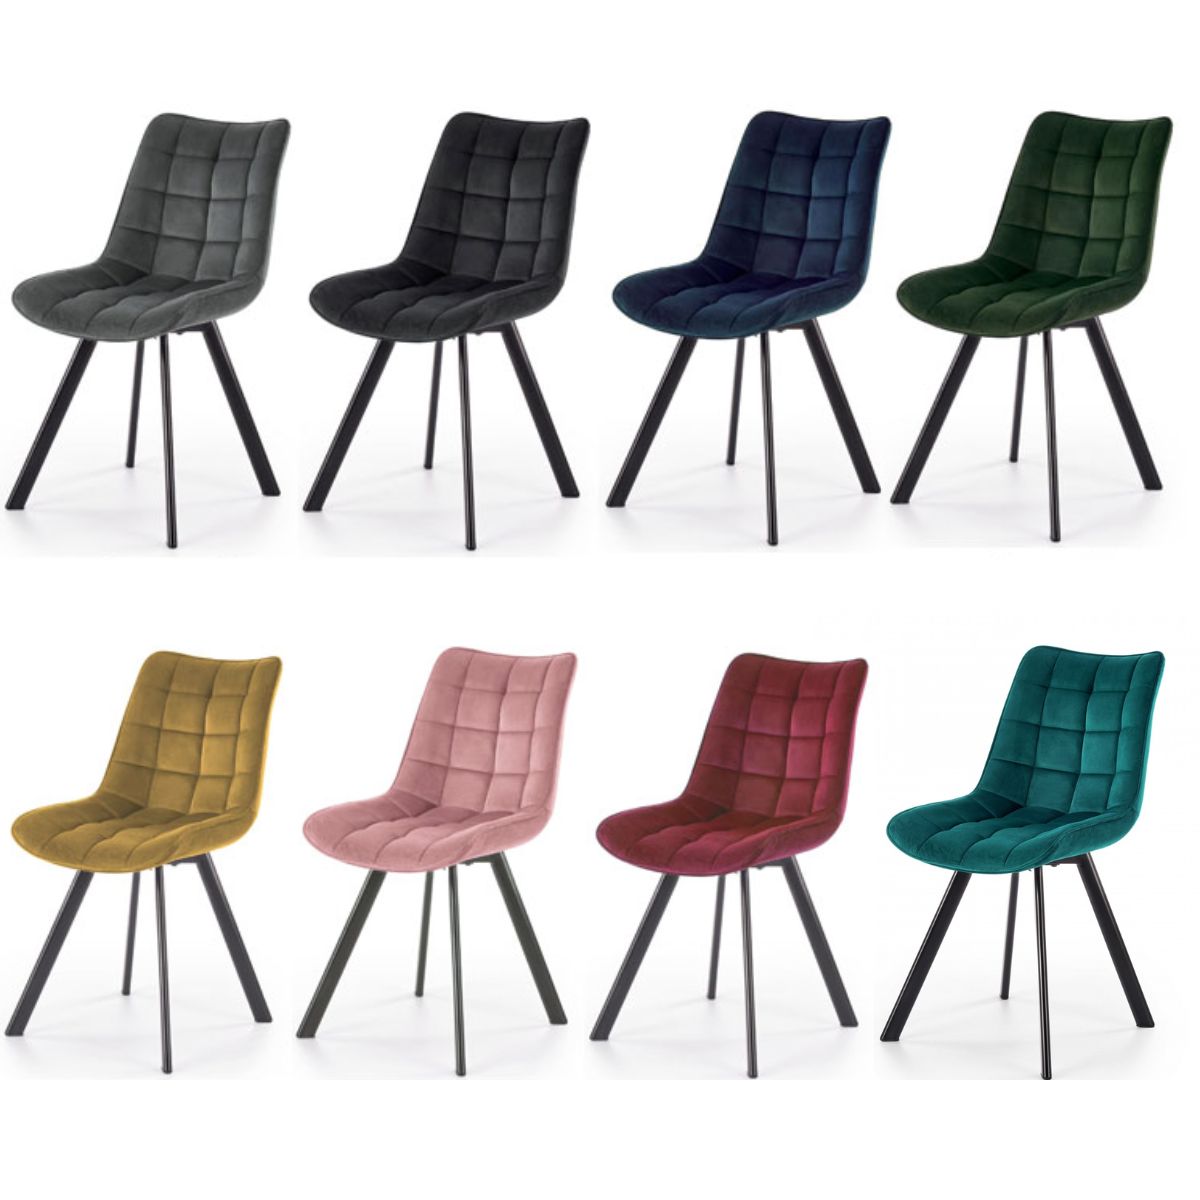 krzesla-k332-kolory